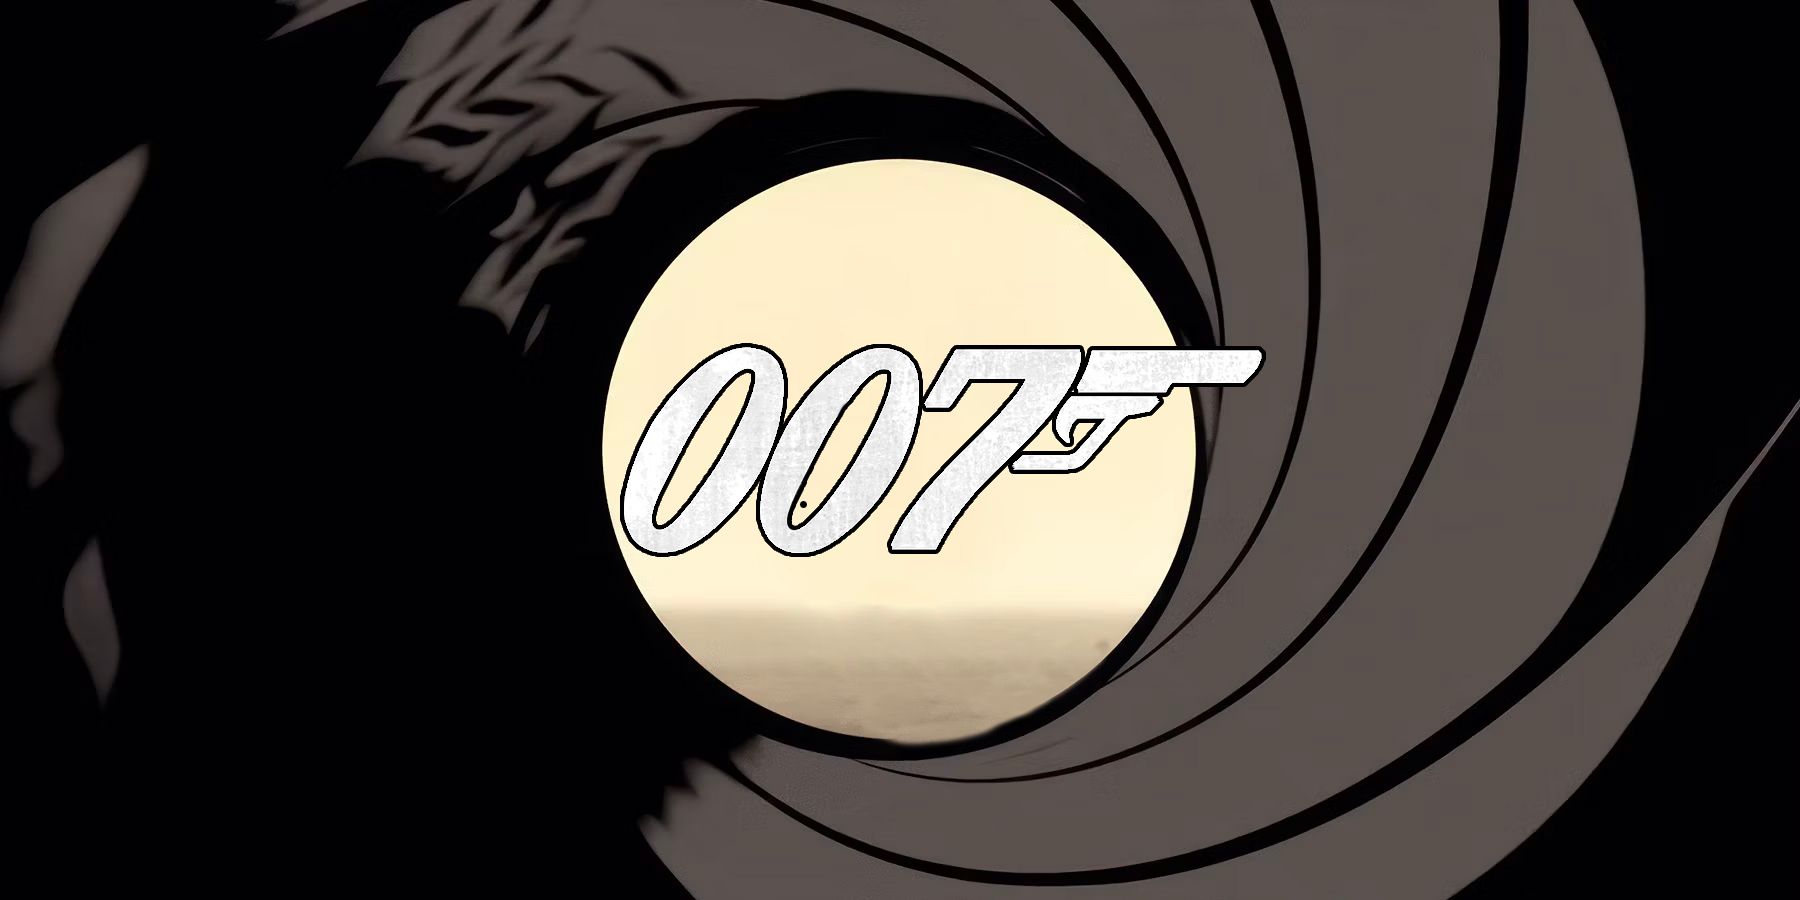 James Bond Update